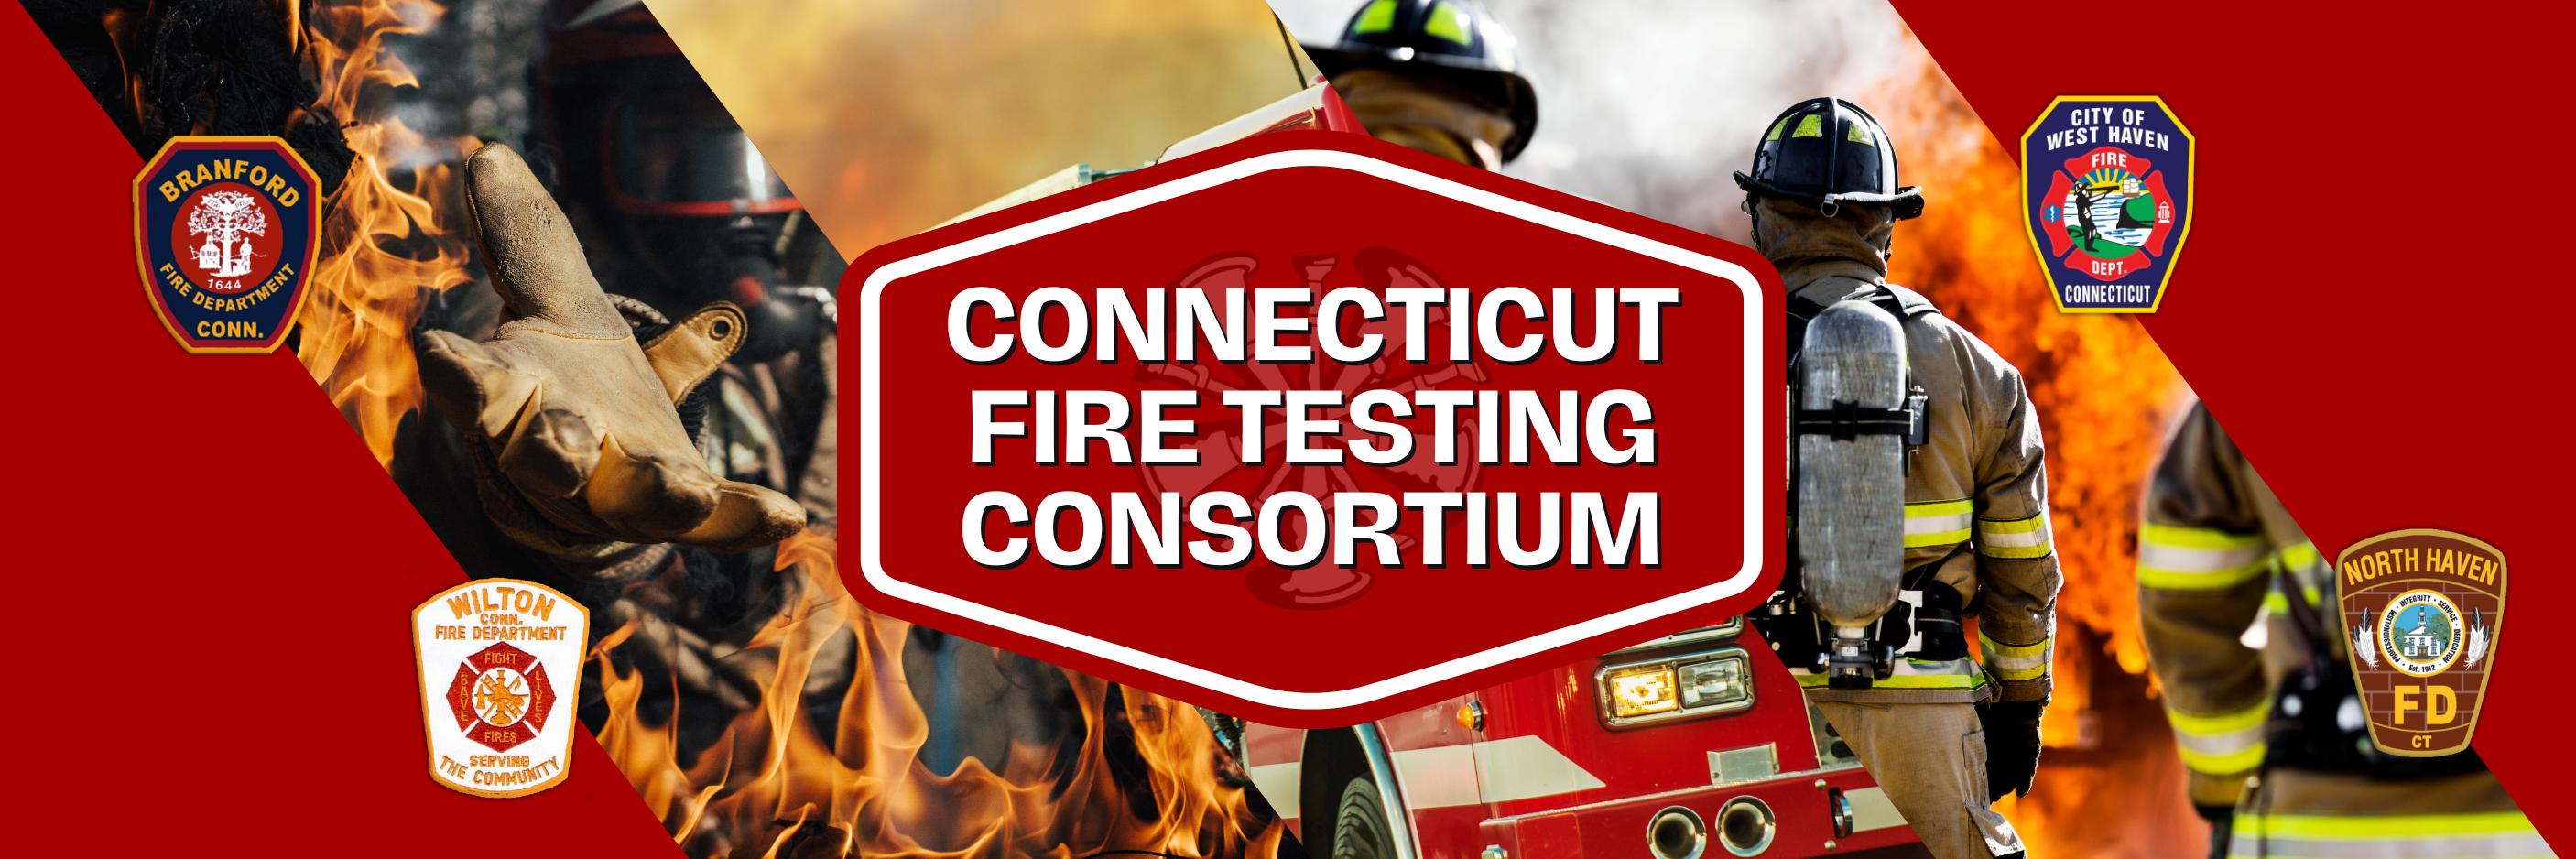 Connecticut Fire Testing Consortium, CT Firefighter Jobs